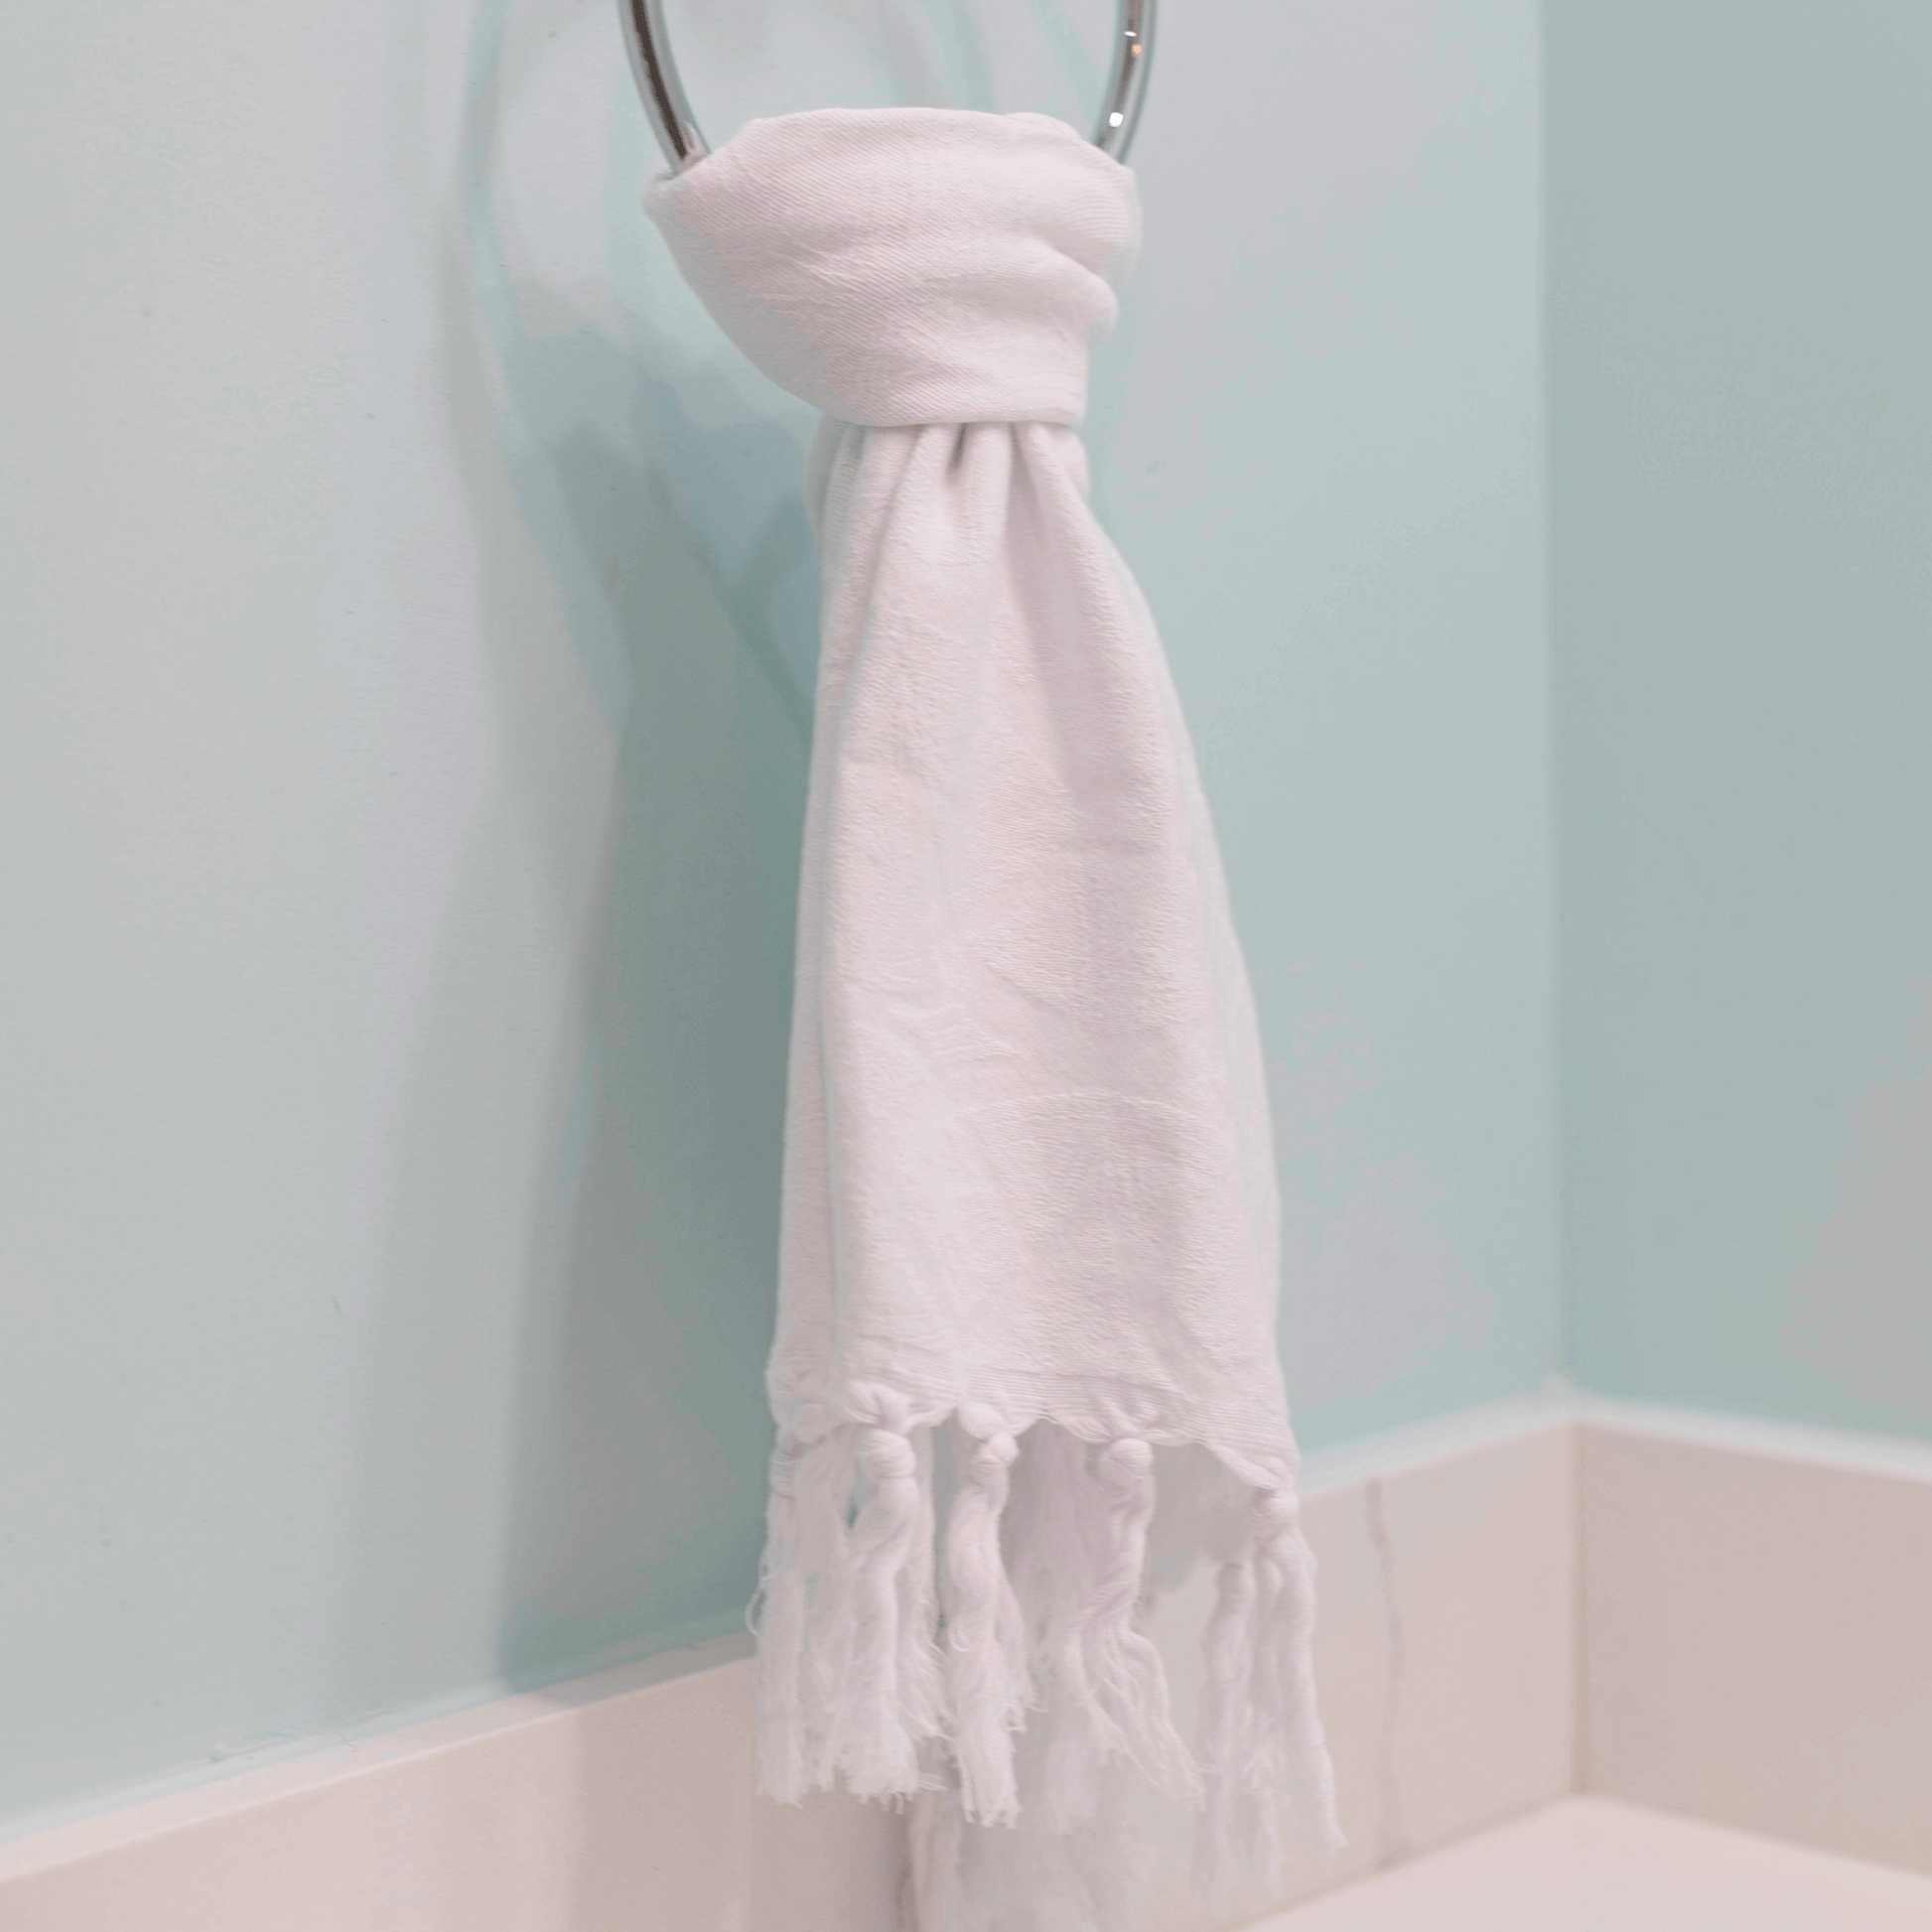  White Turkish towel hanging on hand towel rack